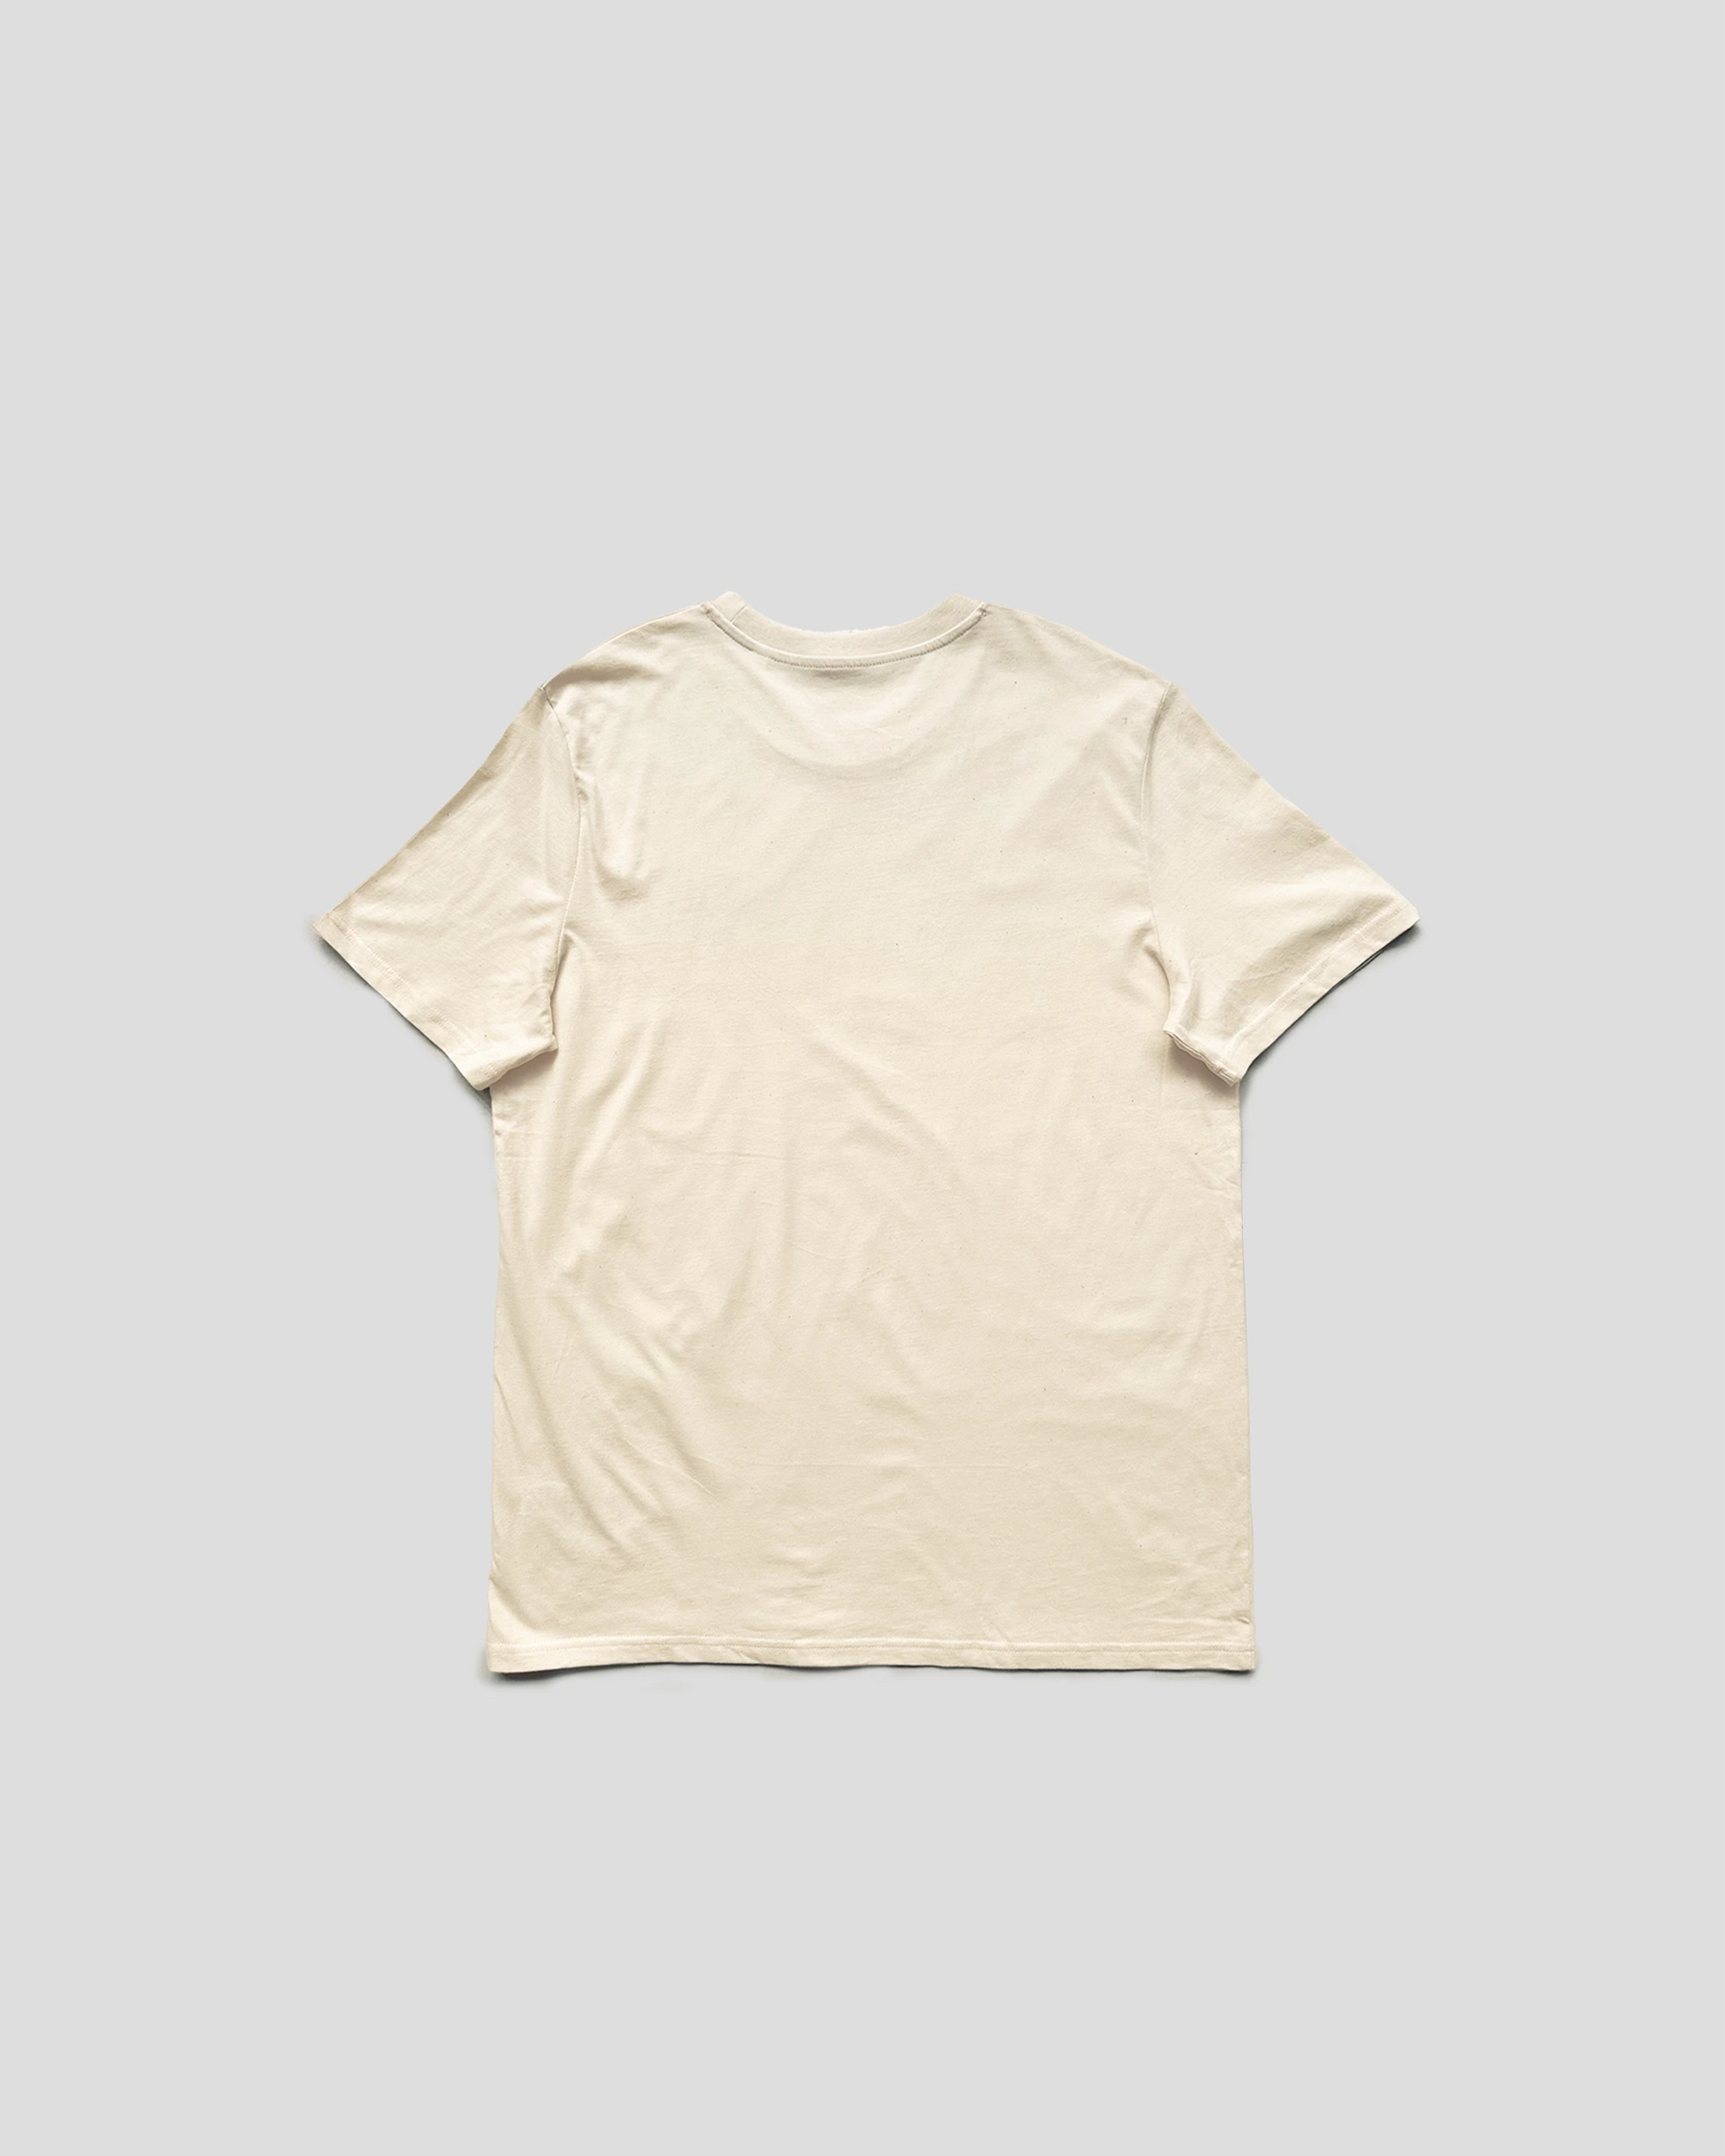 Collectible Unisex T-Shirt - Cream with Black Heimstone Logo HLD